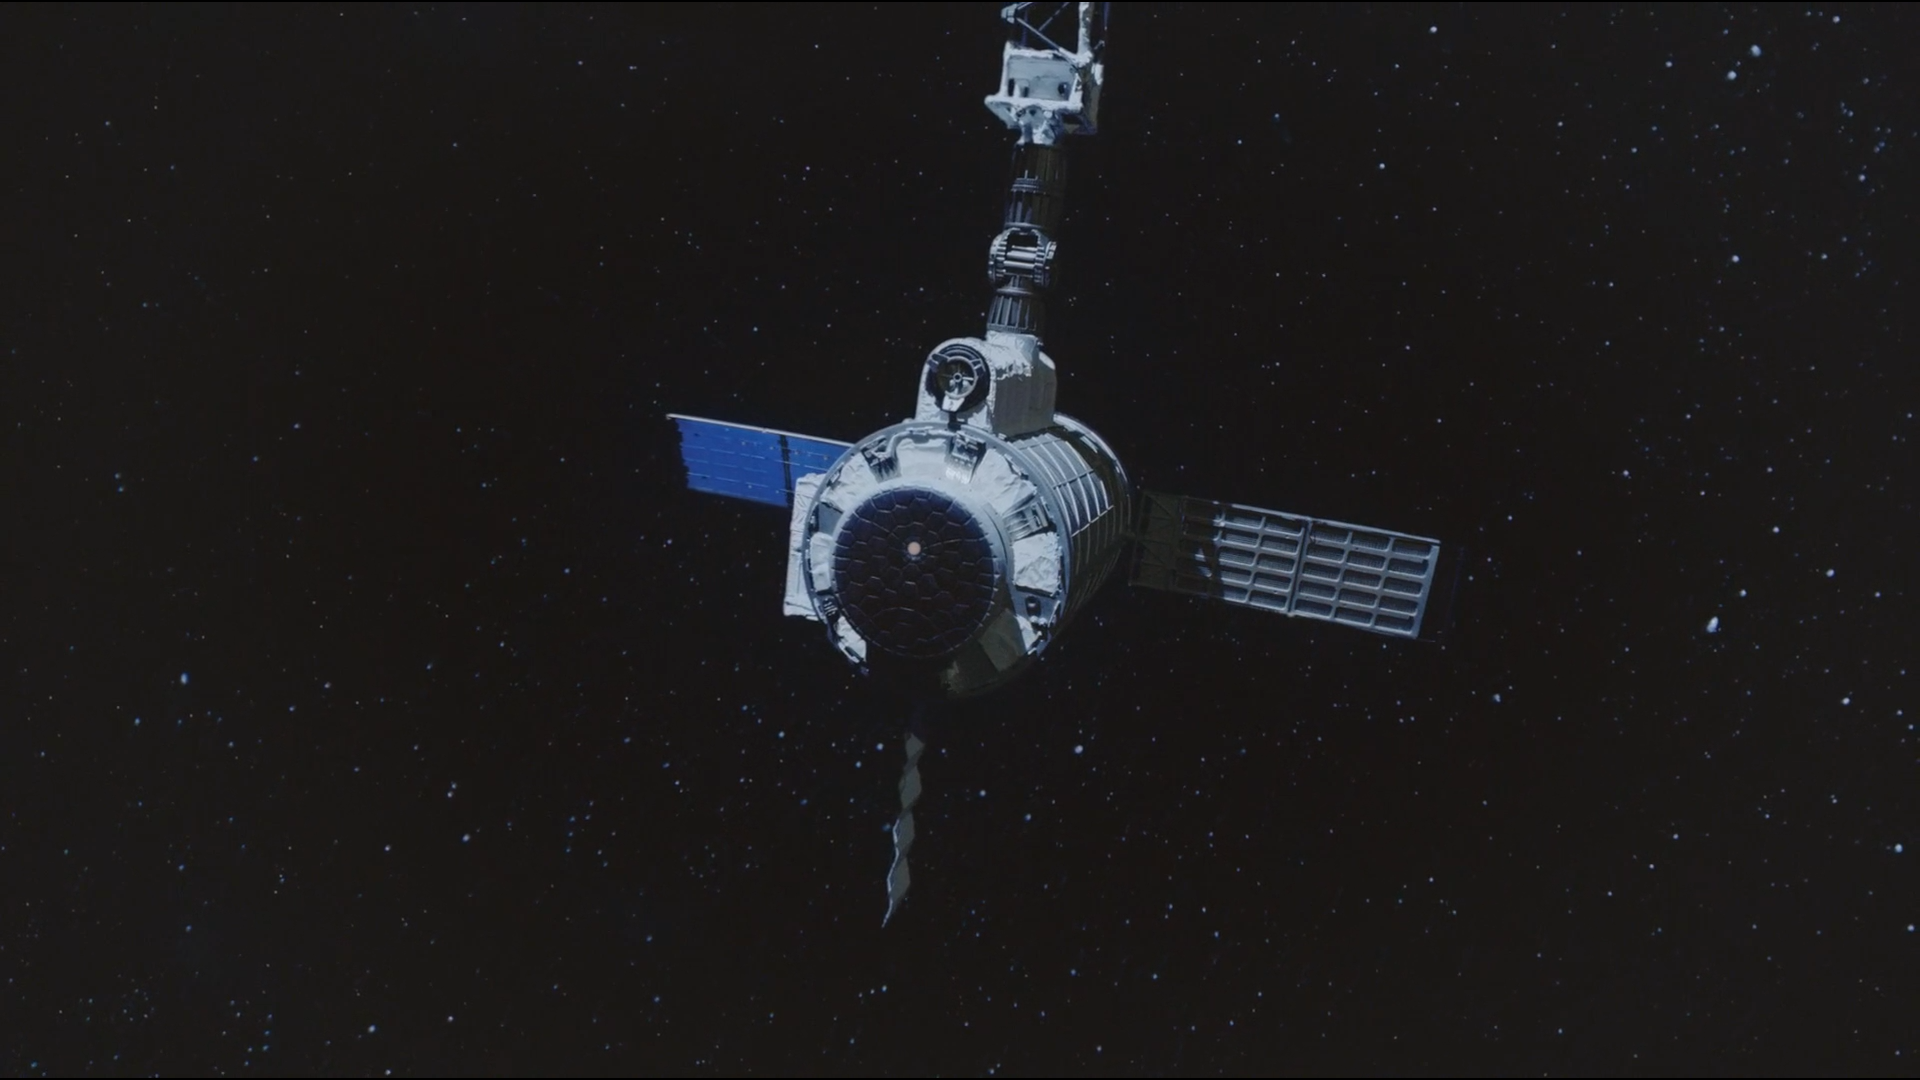 Film Stills Screen Shot Spaceship Satellite Stars Space Adventure Isolation Isolated Rocket Launcher 1920x1080